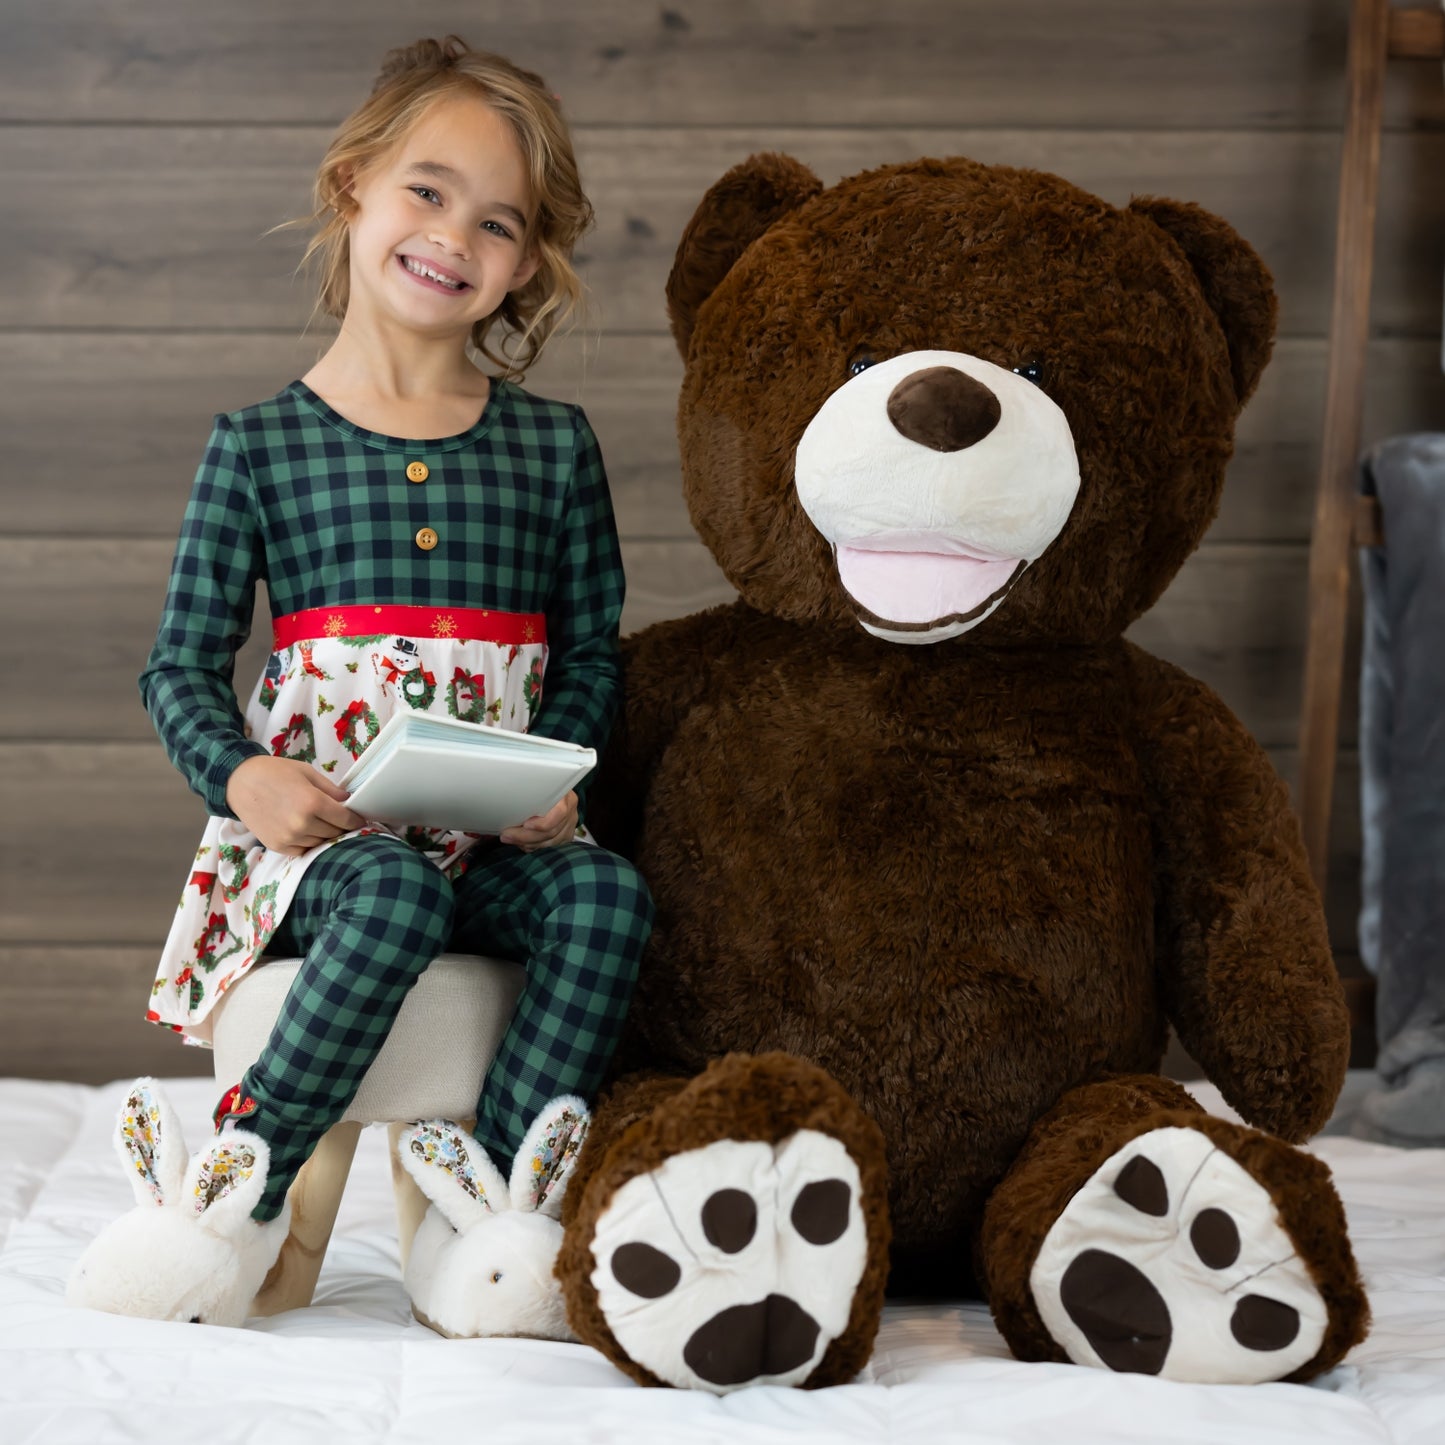 Giant Teddy Bear Stuffed Animal Toy, Dark Brown, 51 Inches